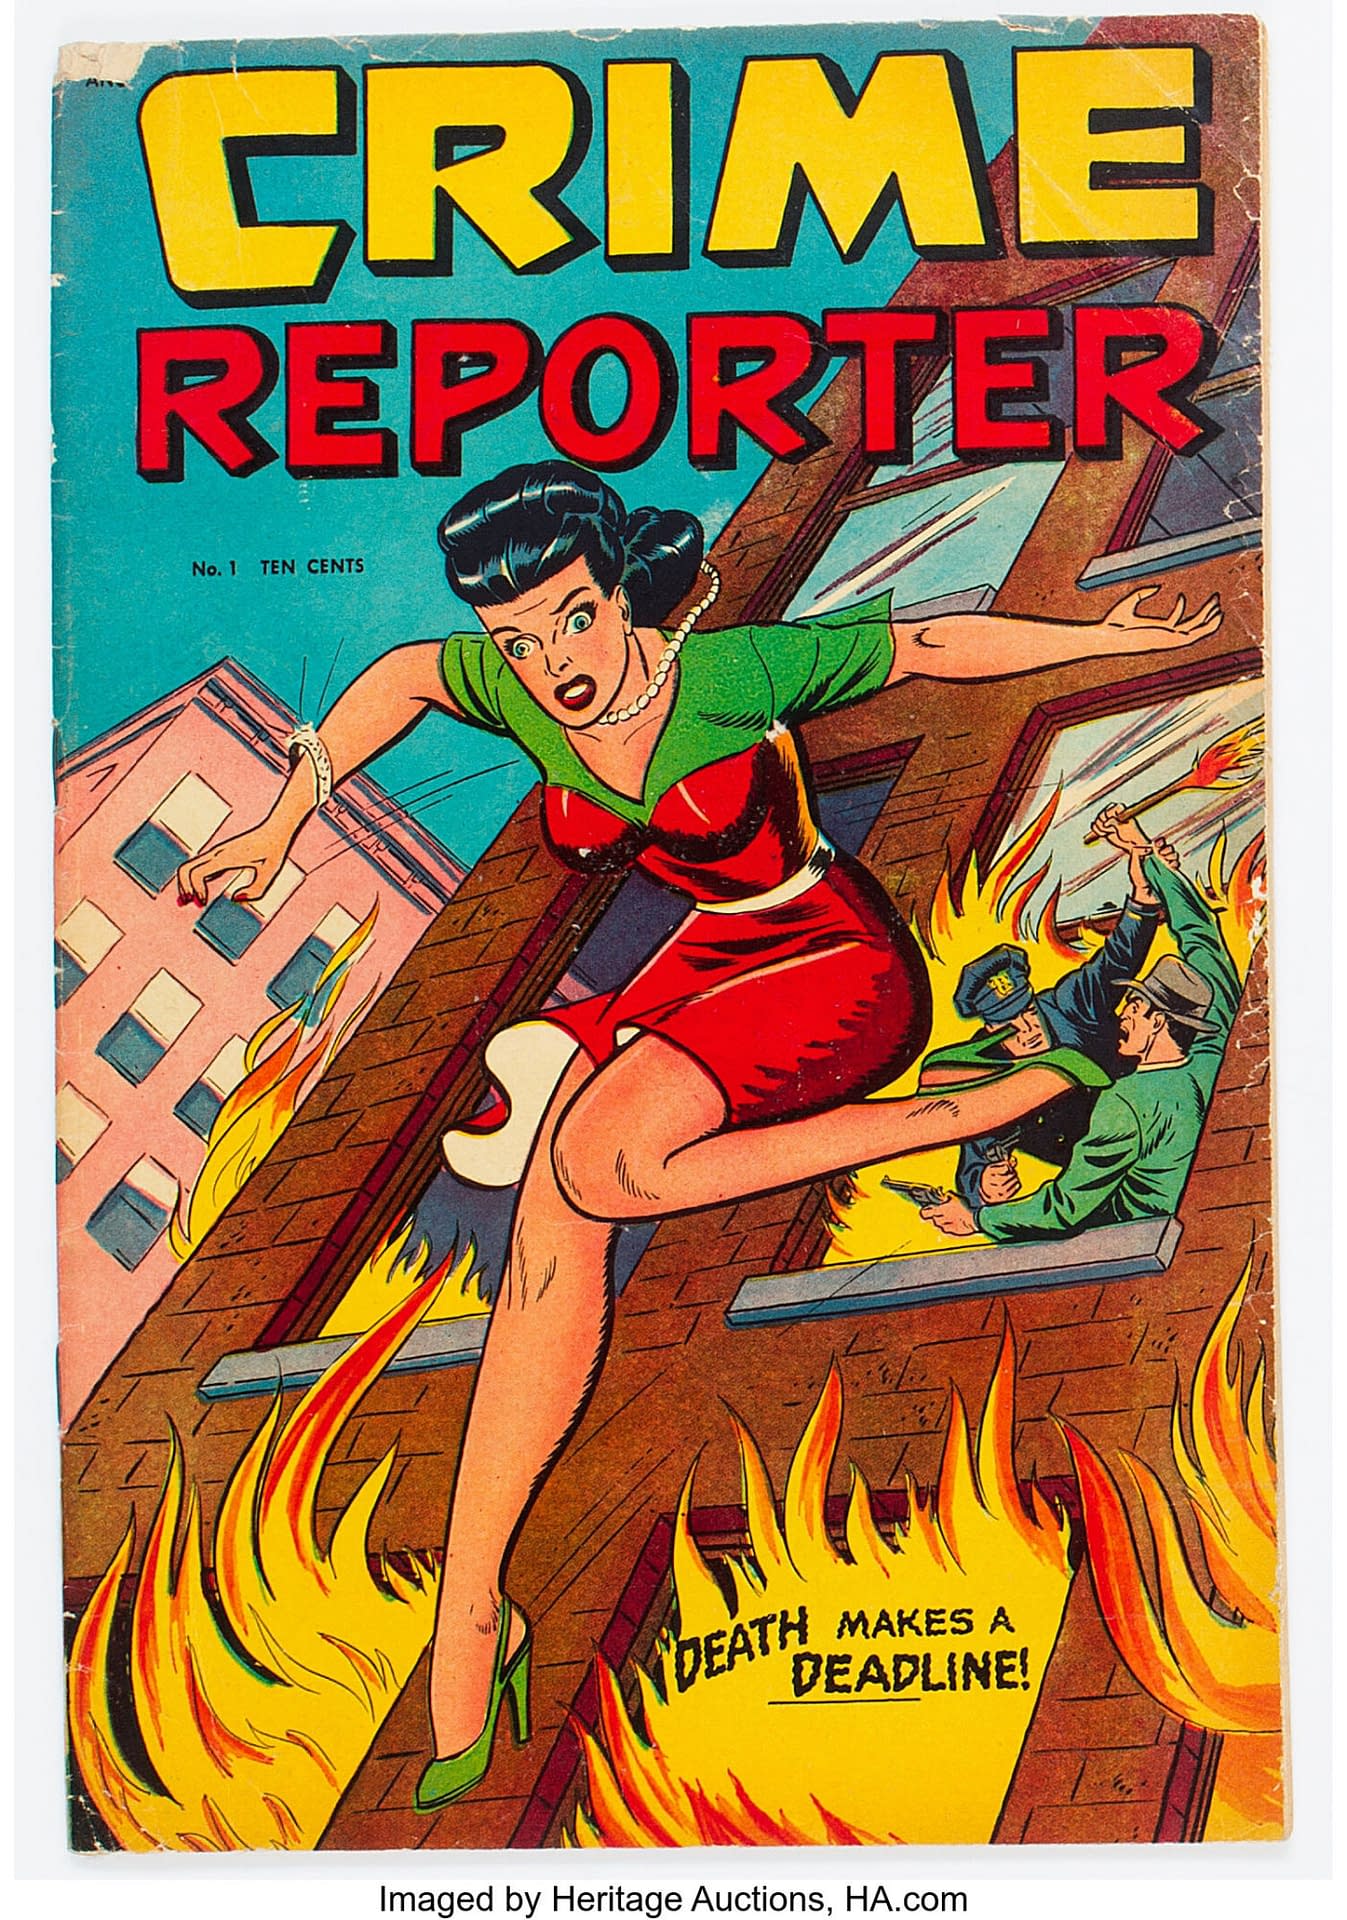 The Comics Reporter